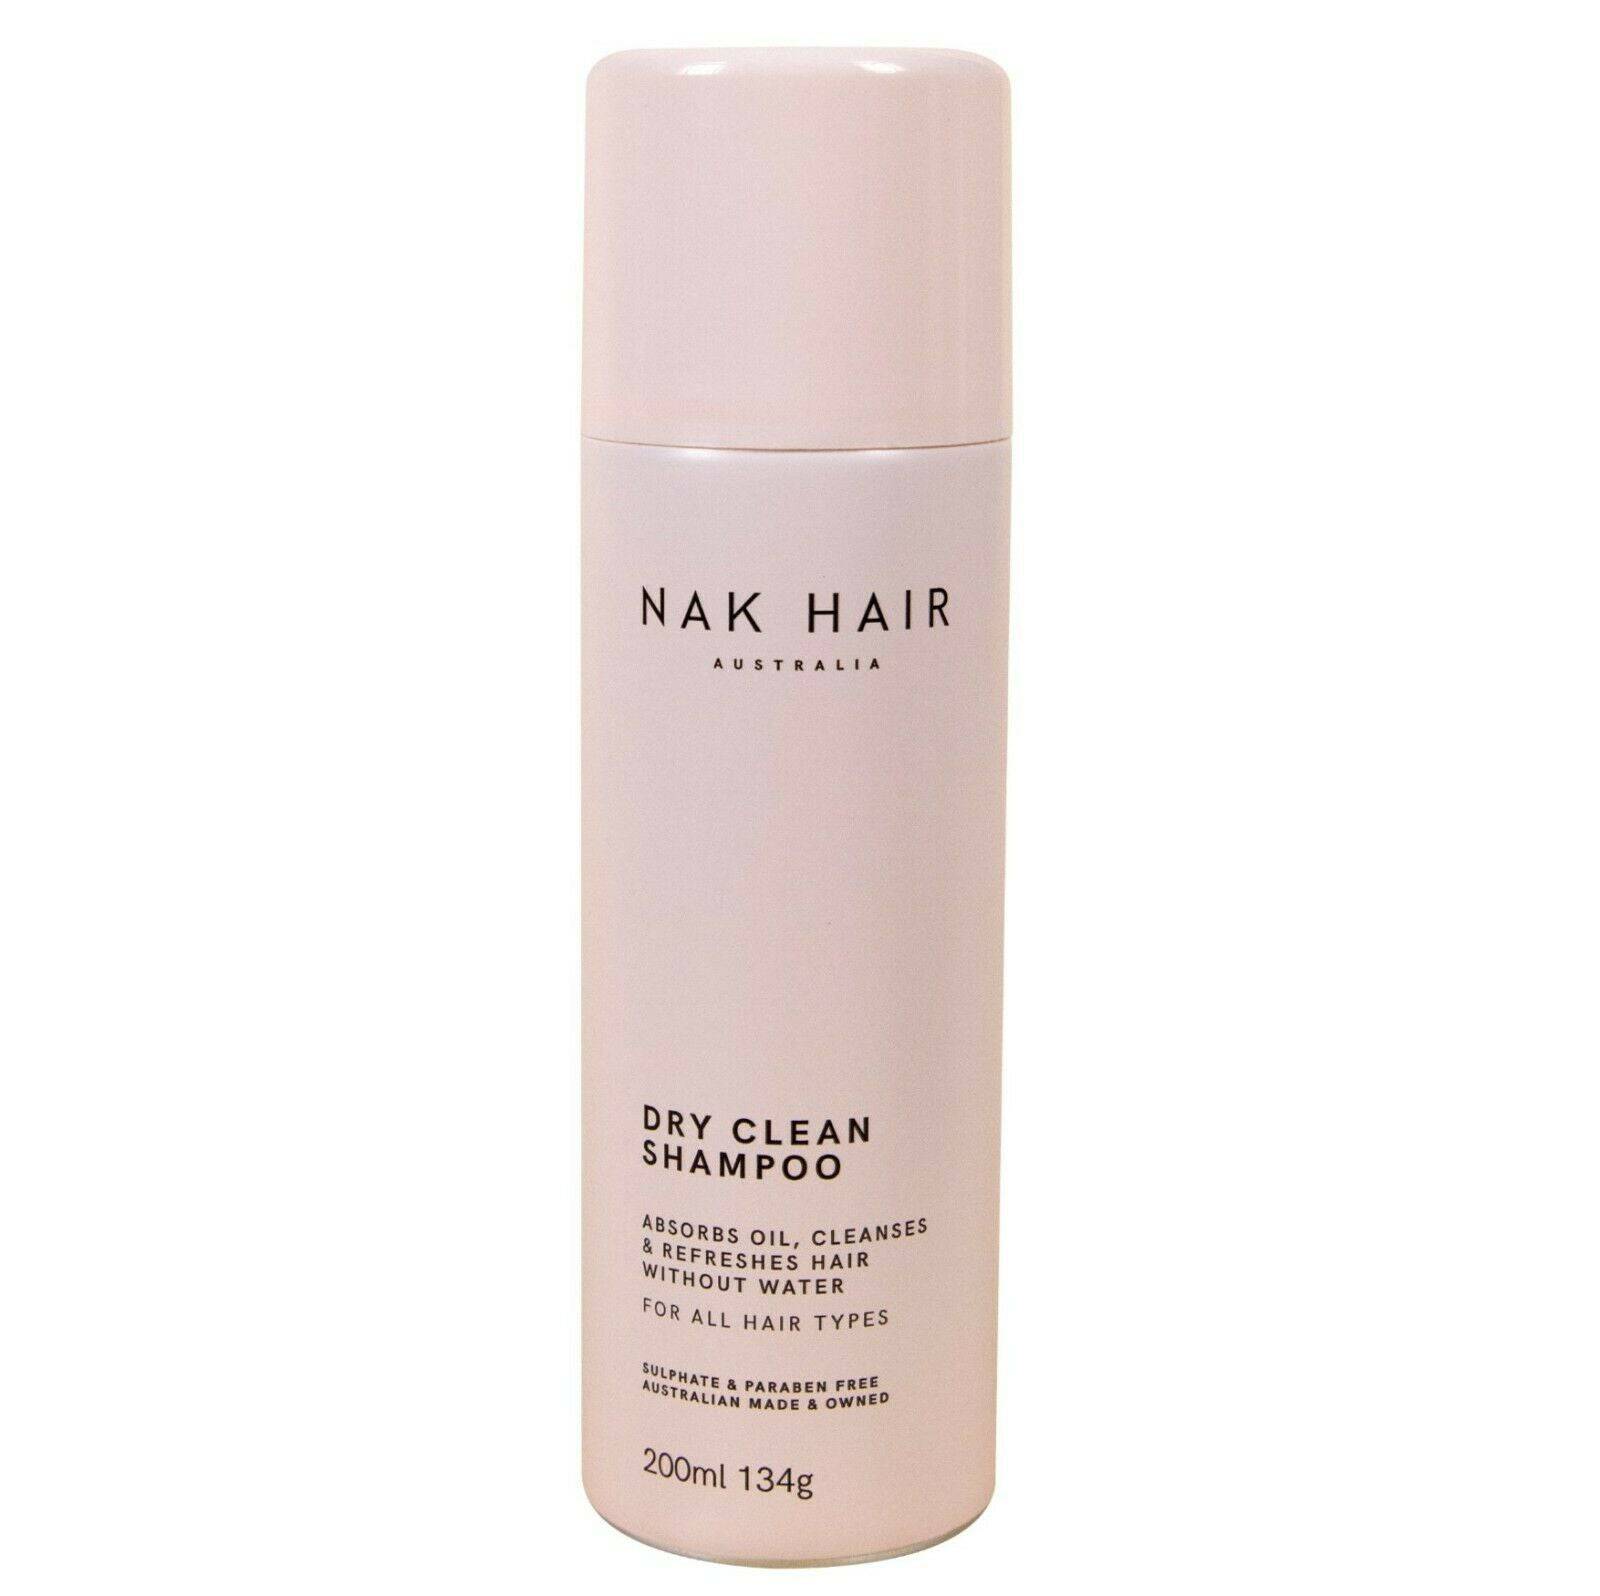 Nak Dry Clean Shampoo 200g a water free dry shampoo